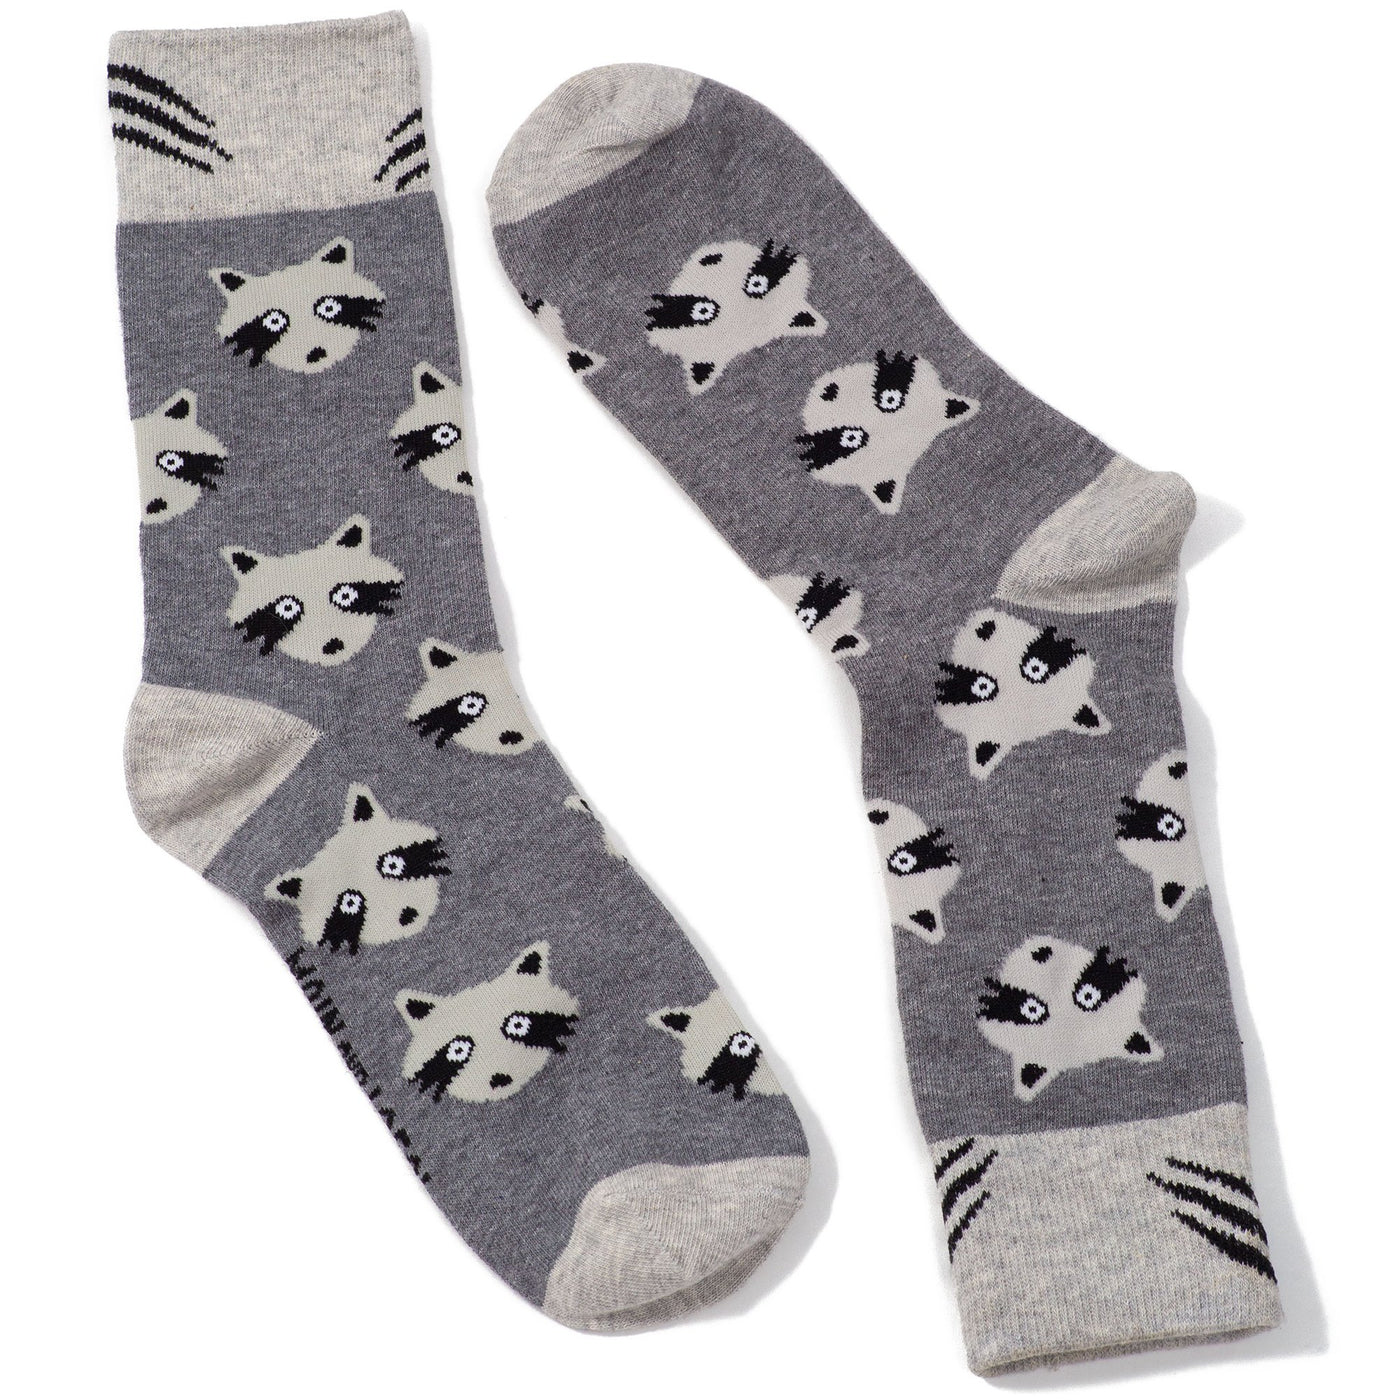 "Toronto Raccoon" Cotton Crew Socks by Main & Local